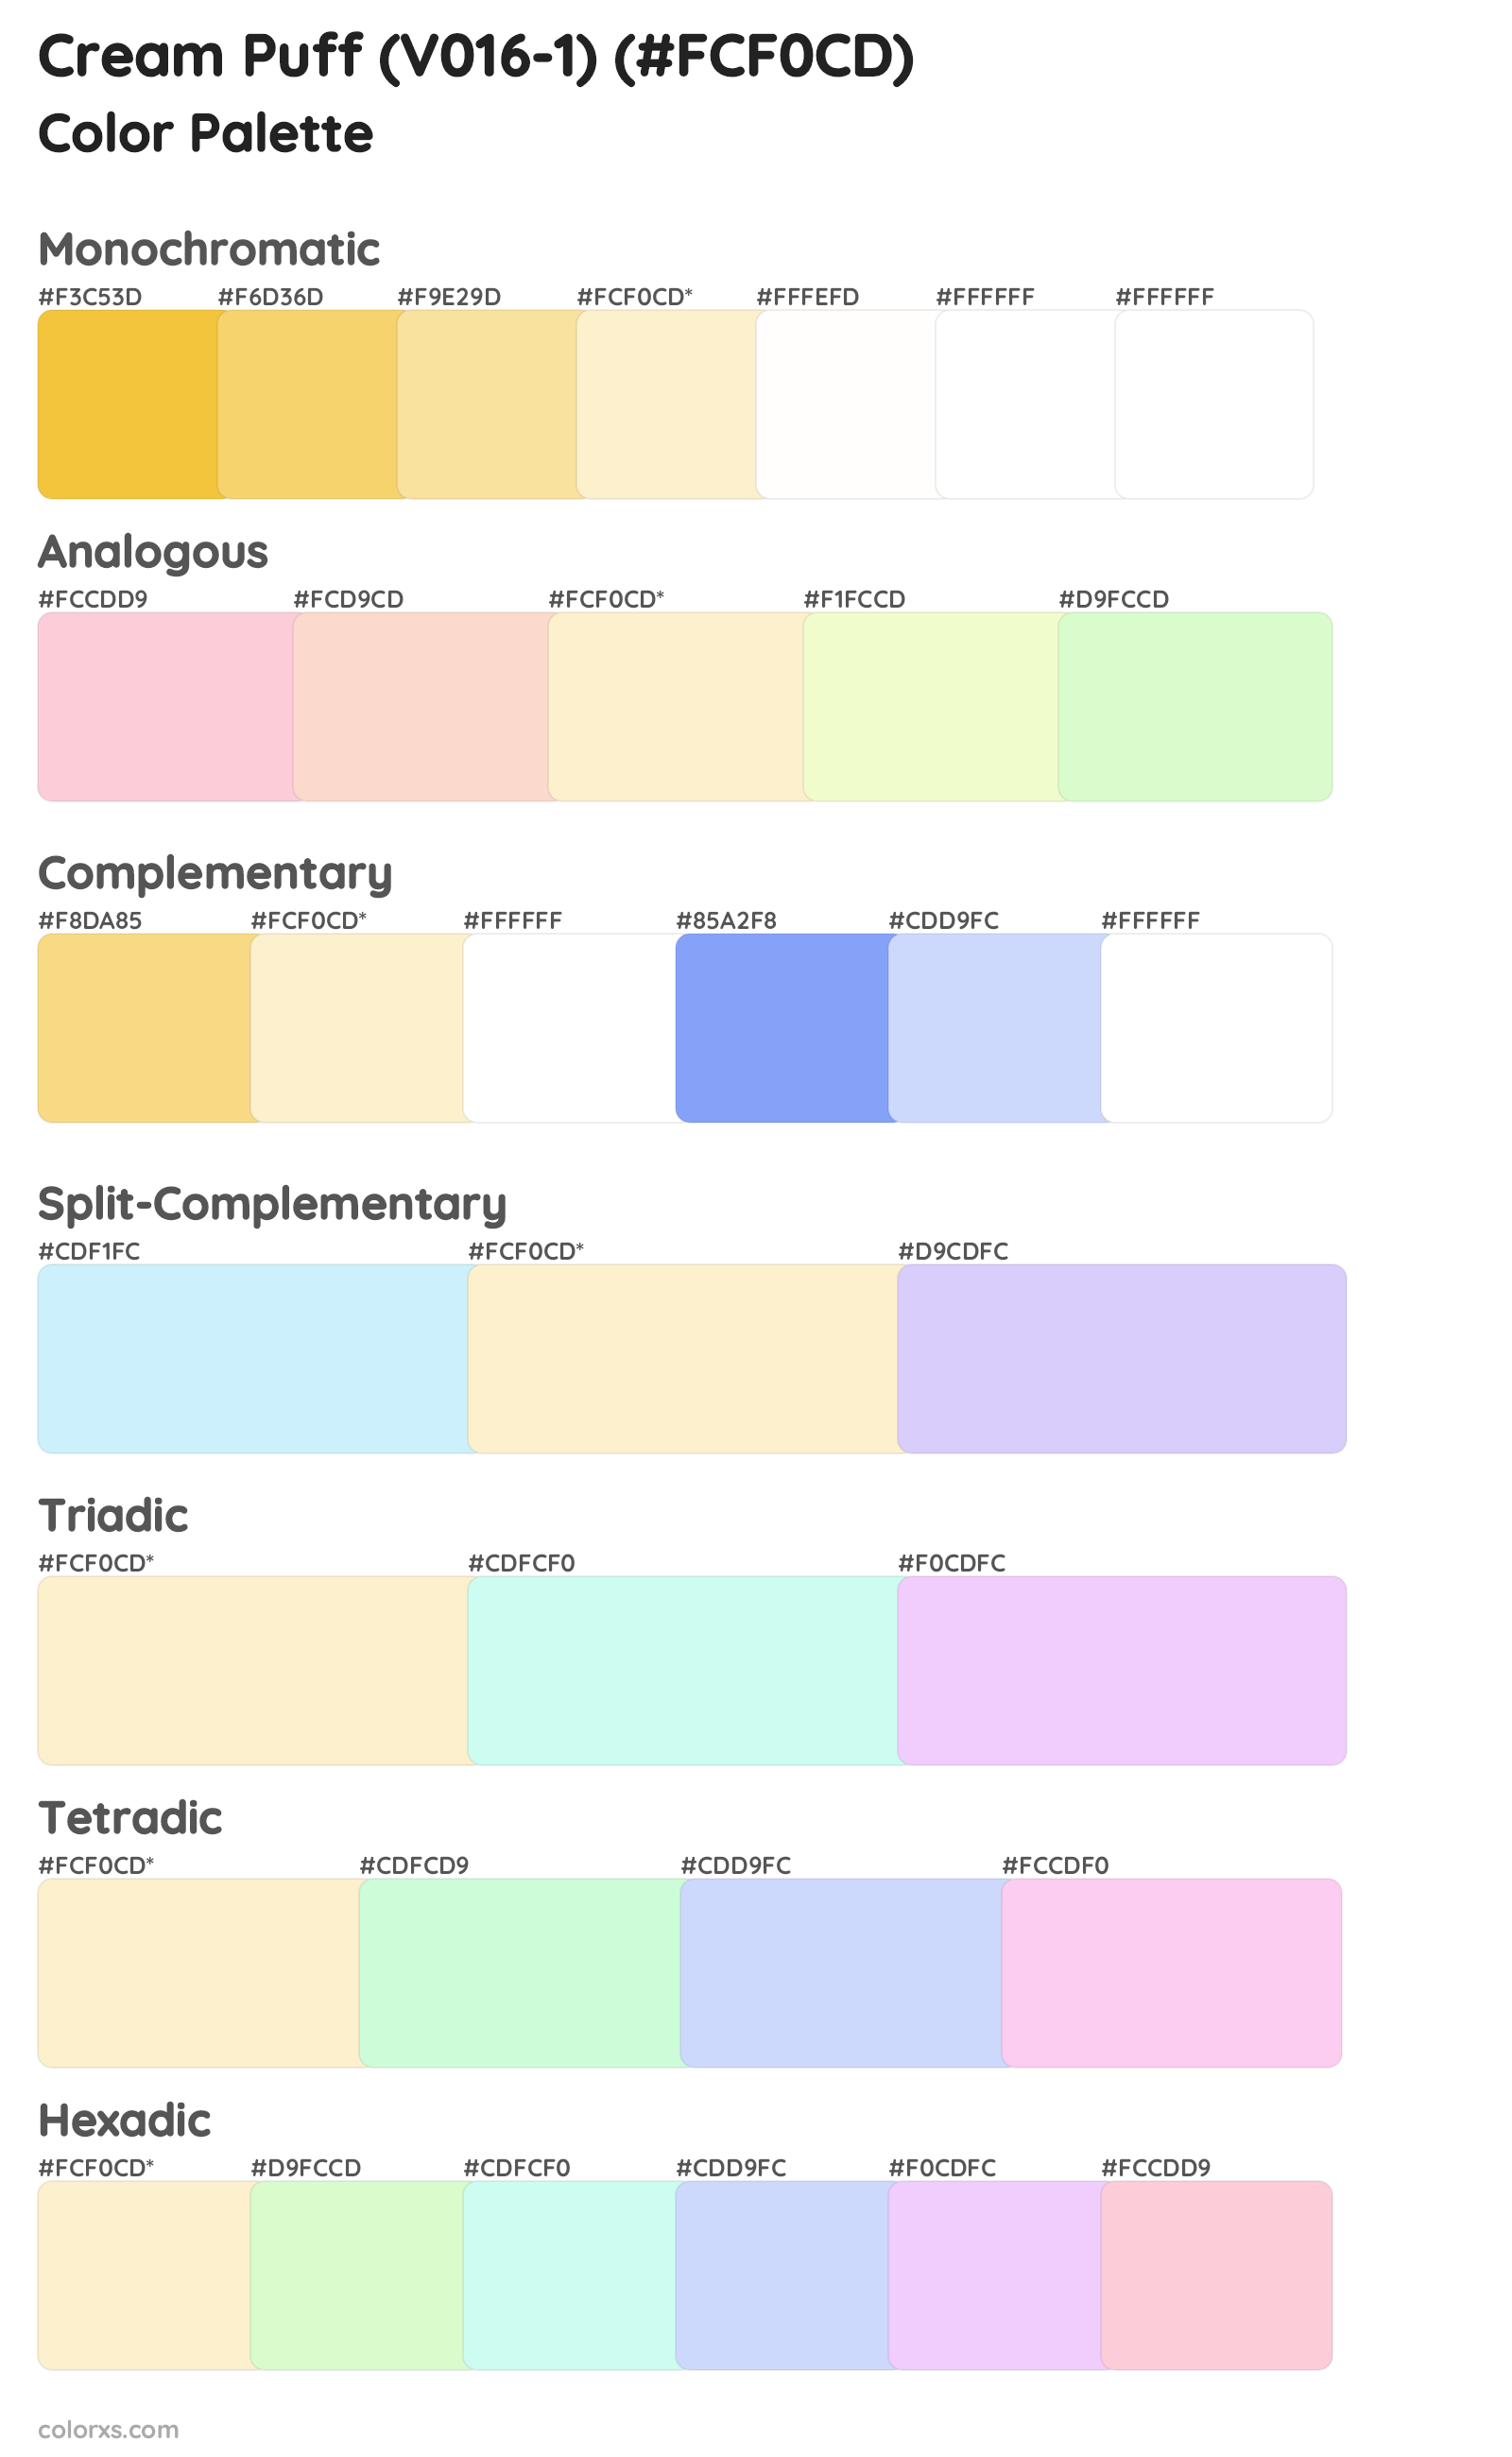 Cream Puff (V016-1) Color Scheme Palettes